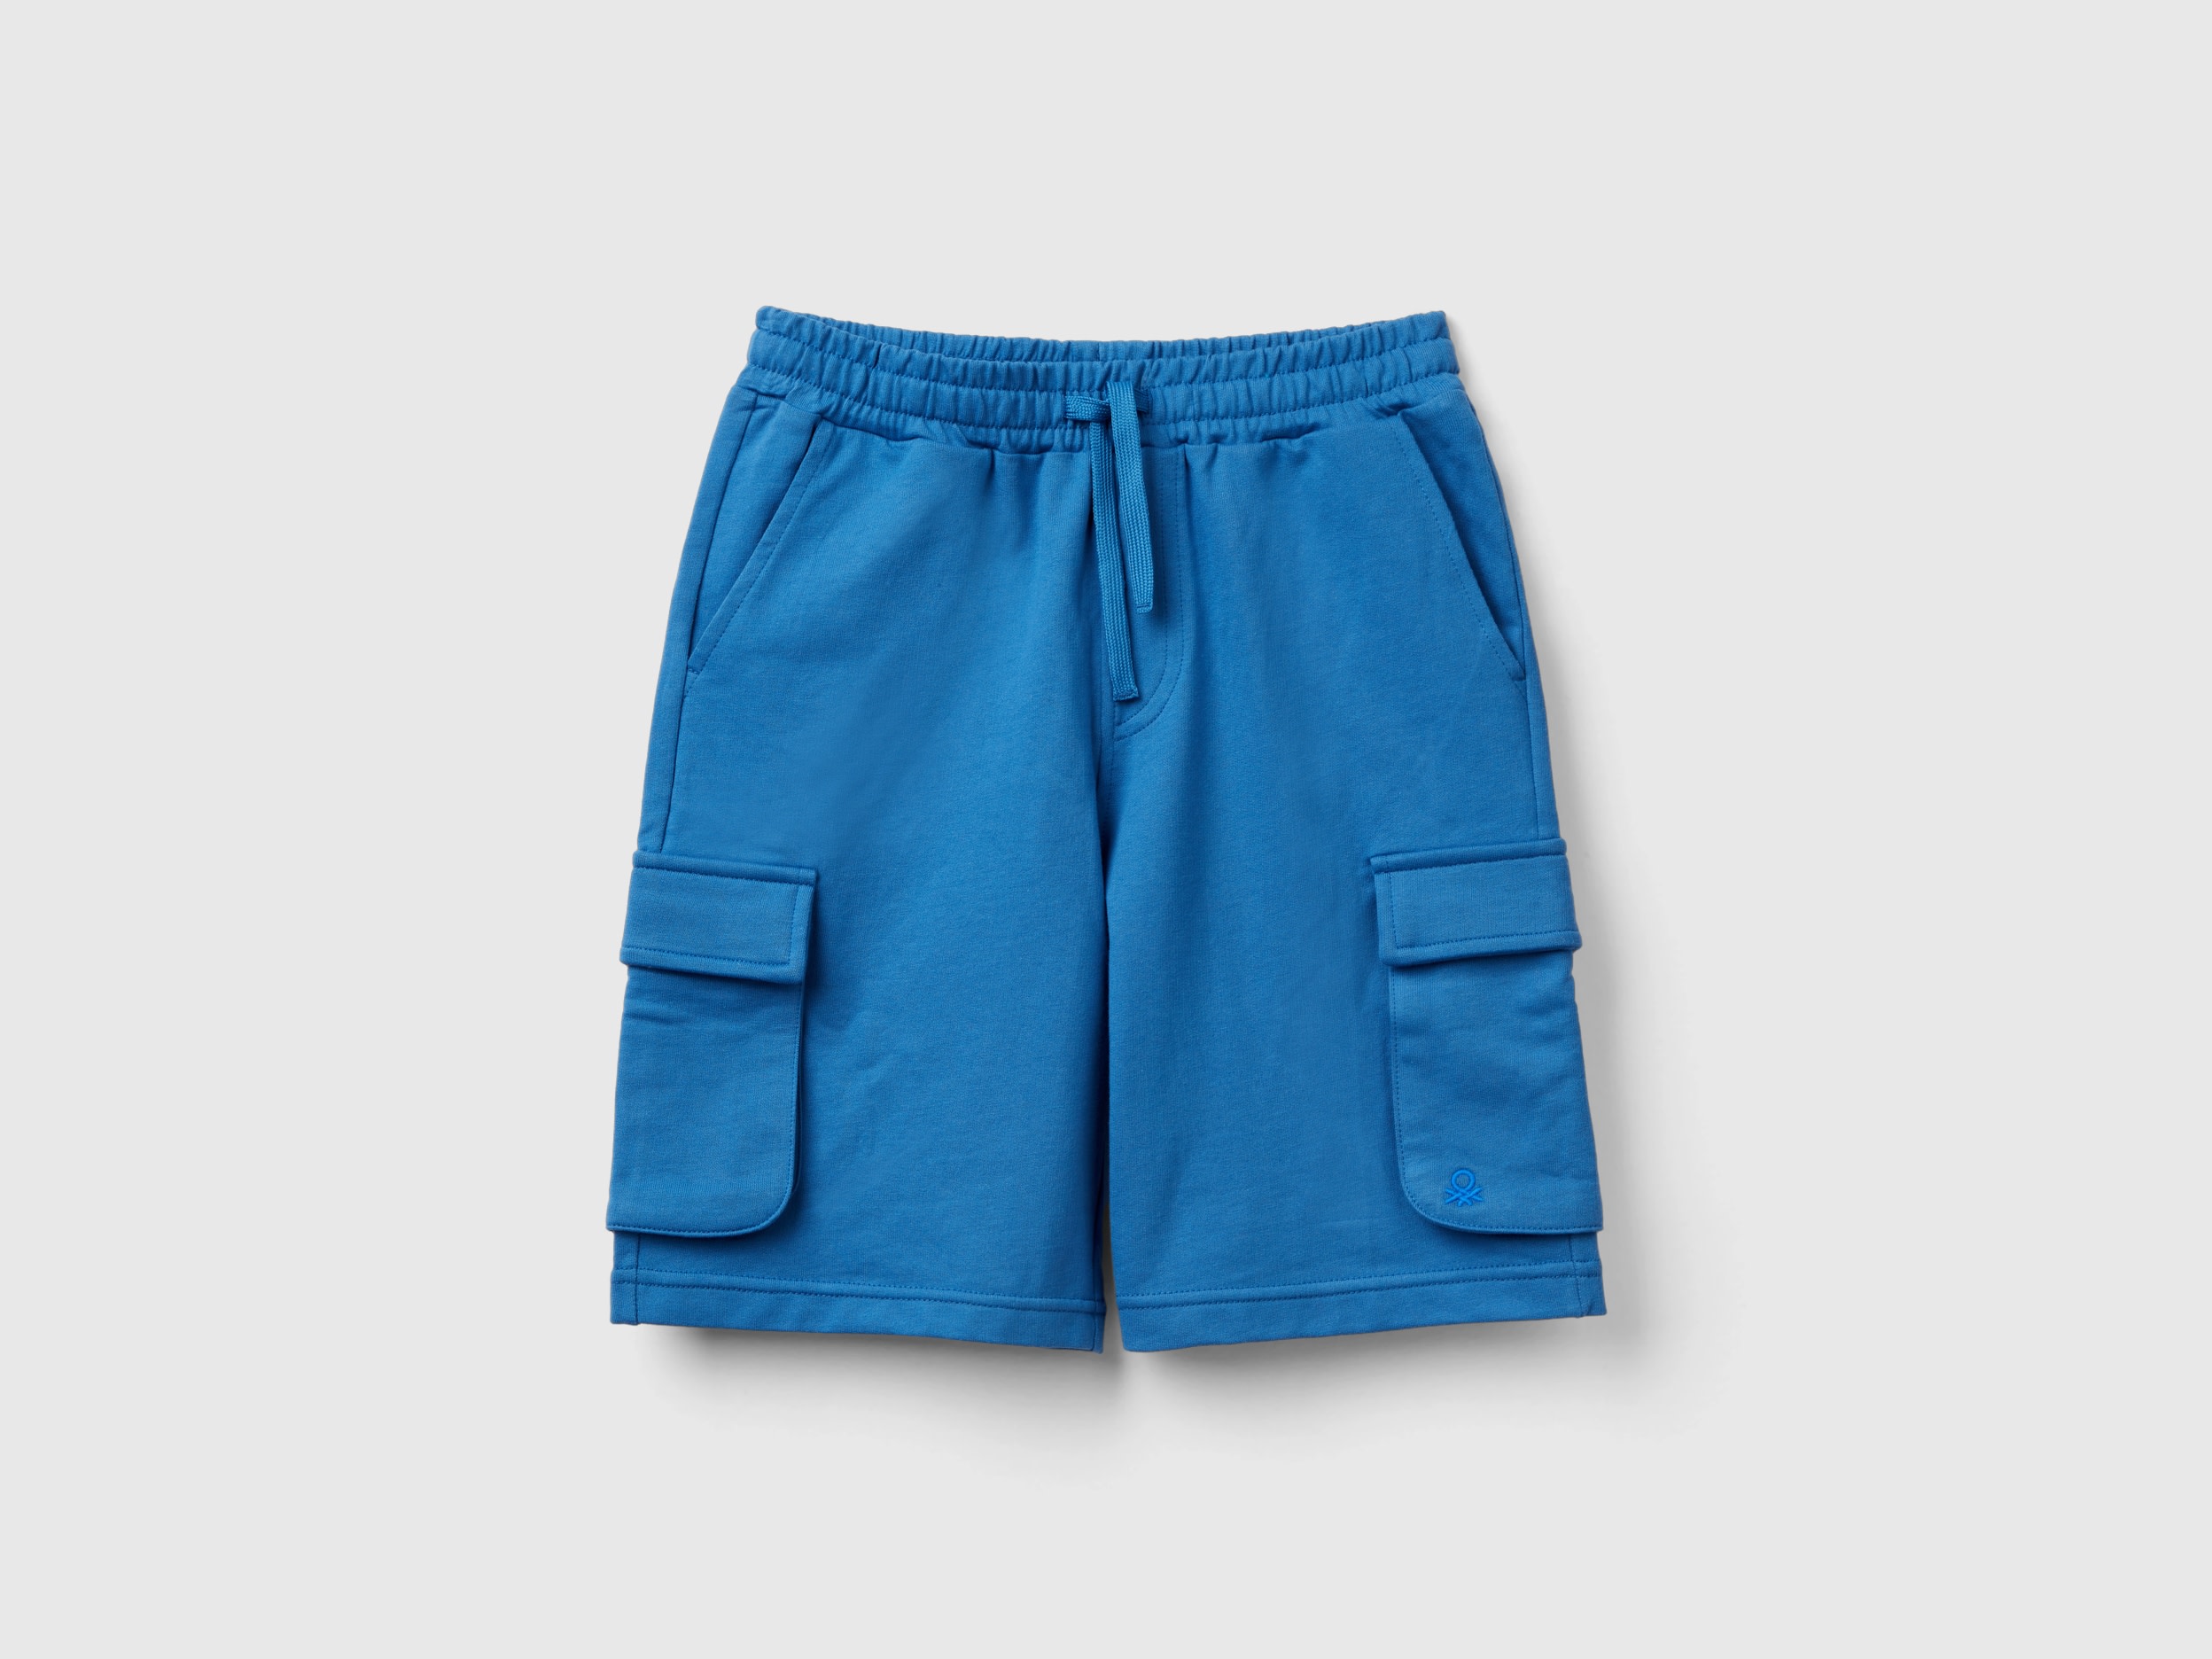 Image of Benetton, Cargo Shorts In Light Sweat Fabric, size 3XL, Blue, Kids